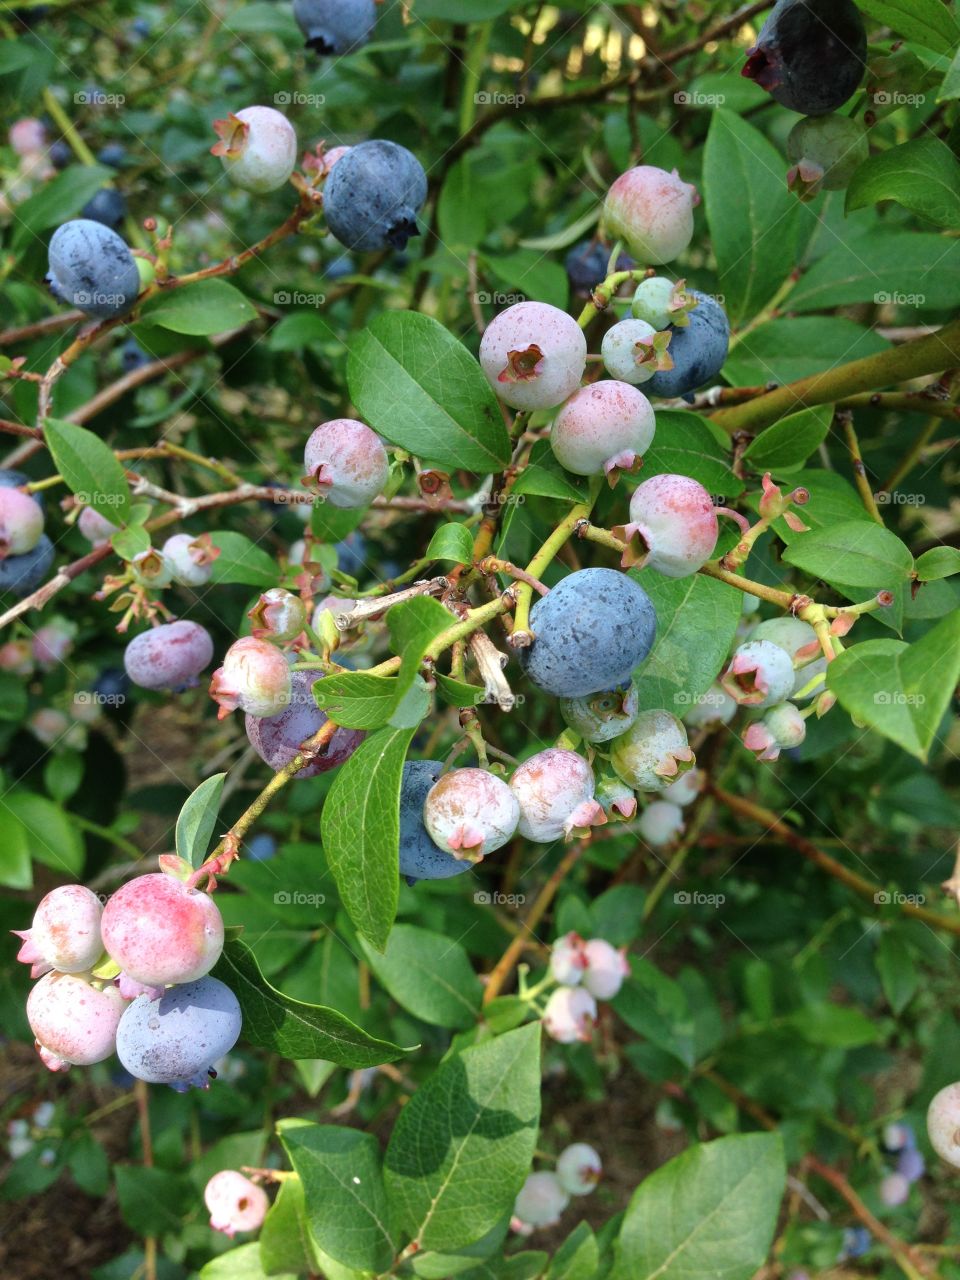 Blueberry picking 